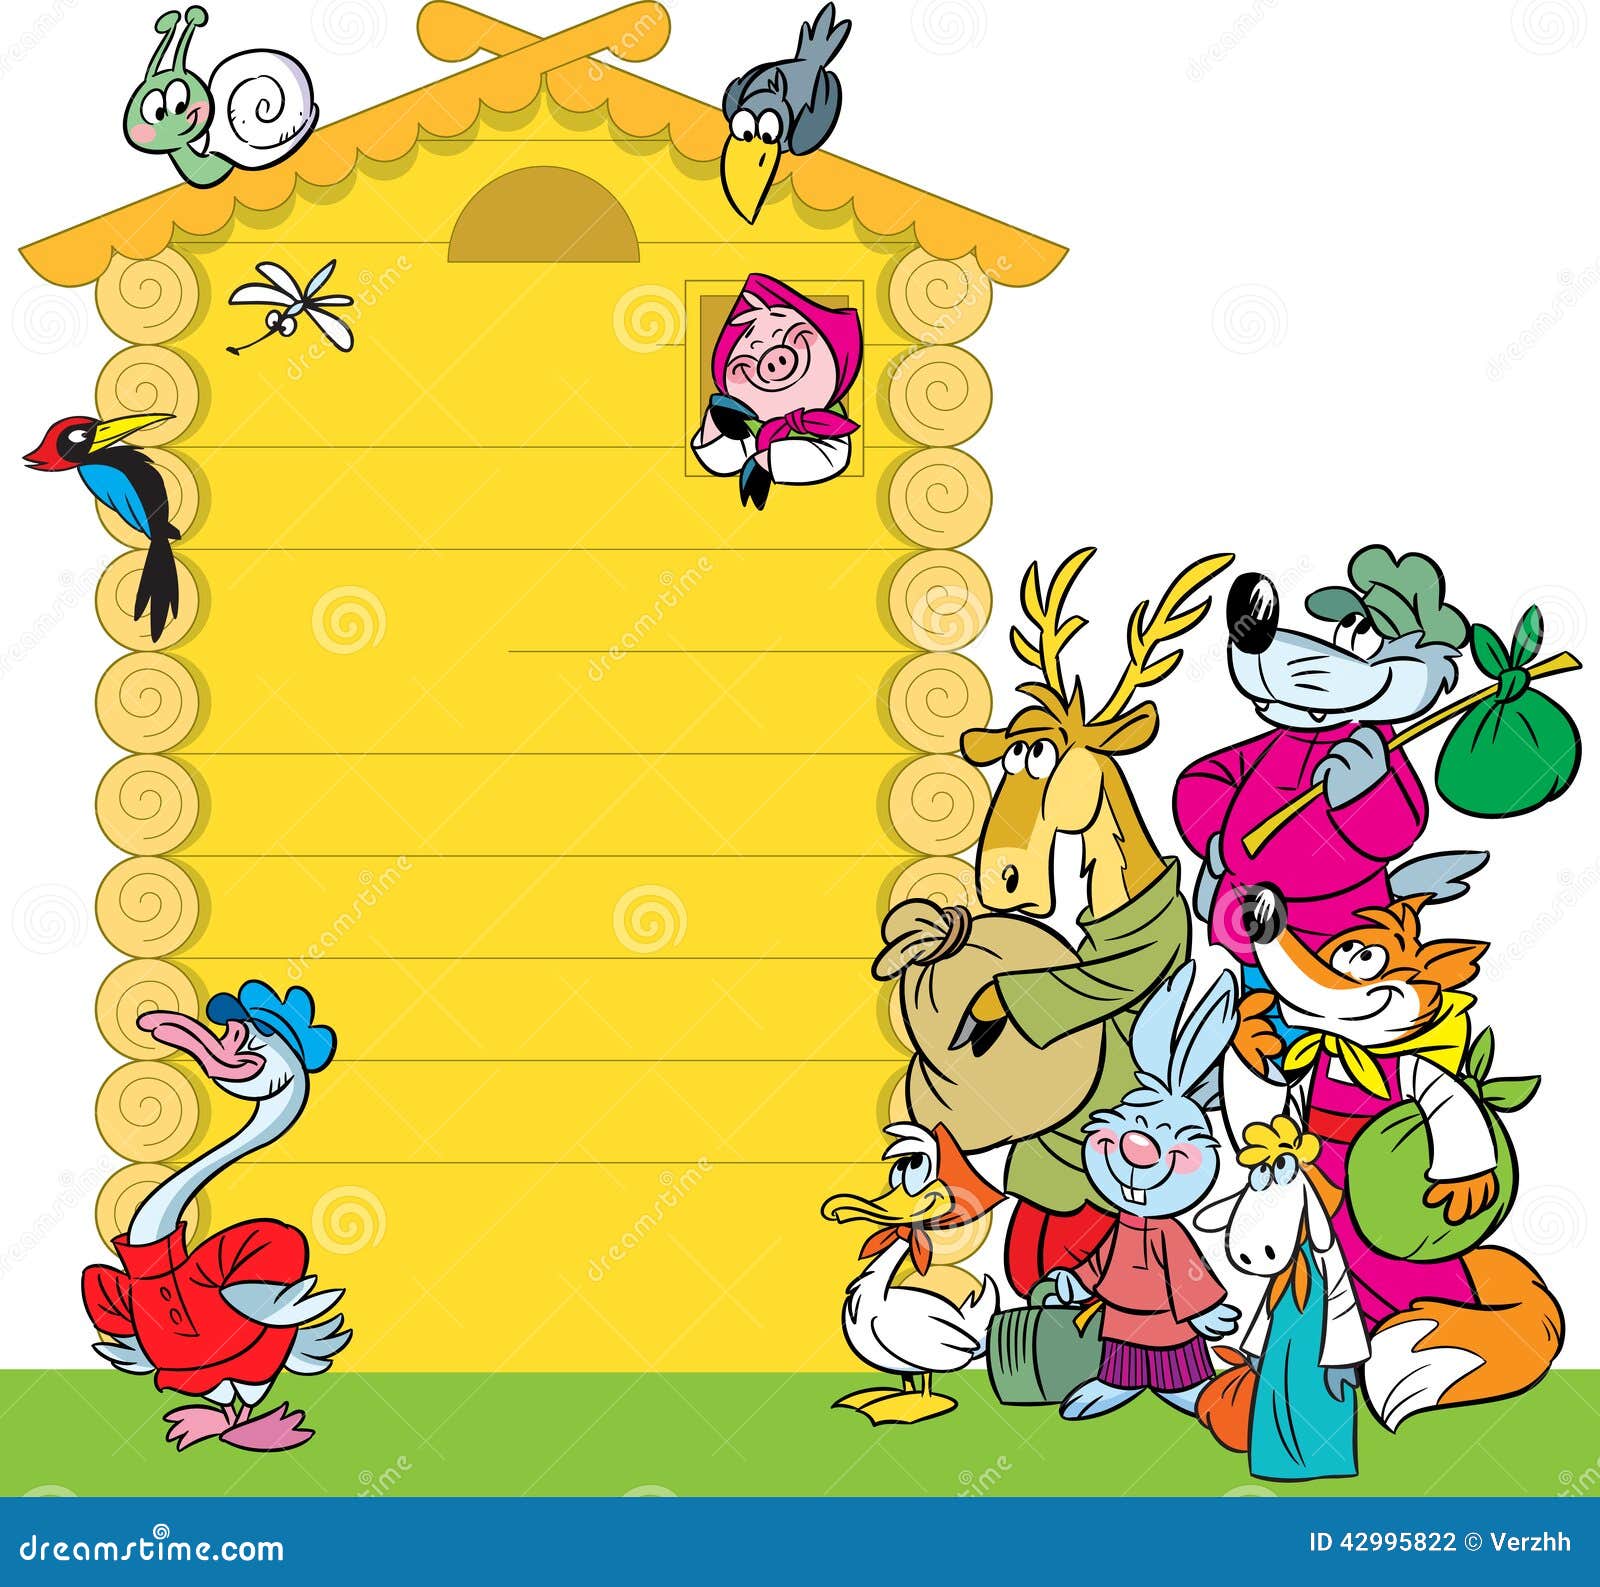 Cartoon house for animals stock vector. Illustration of design - 42995822